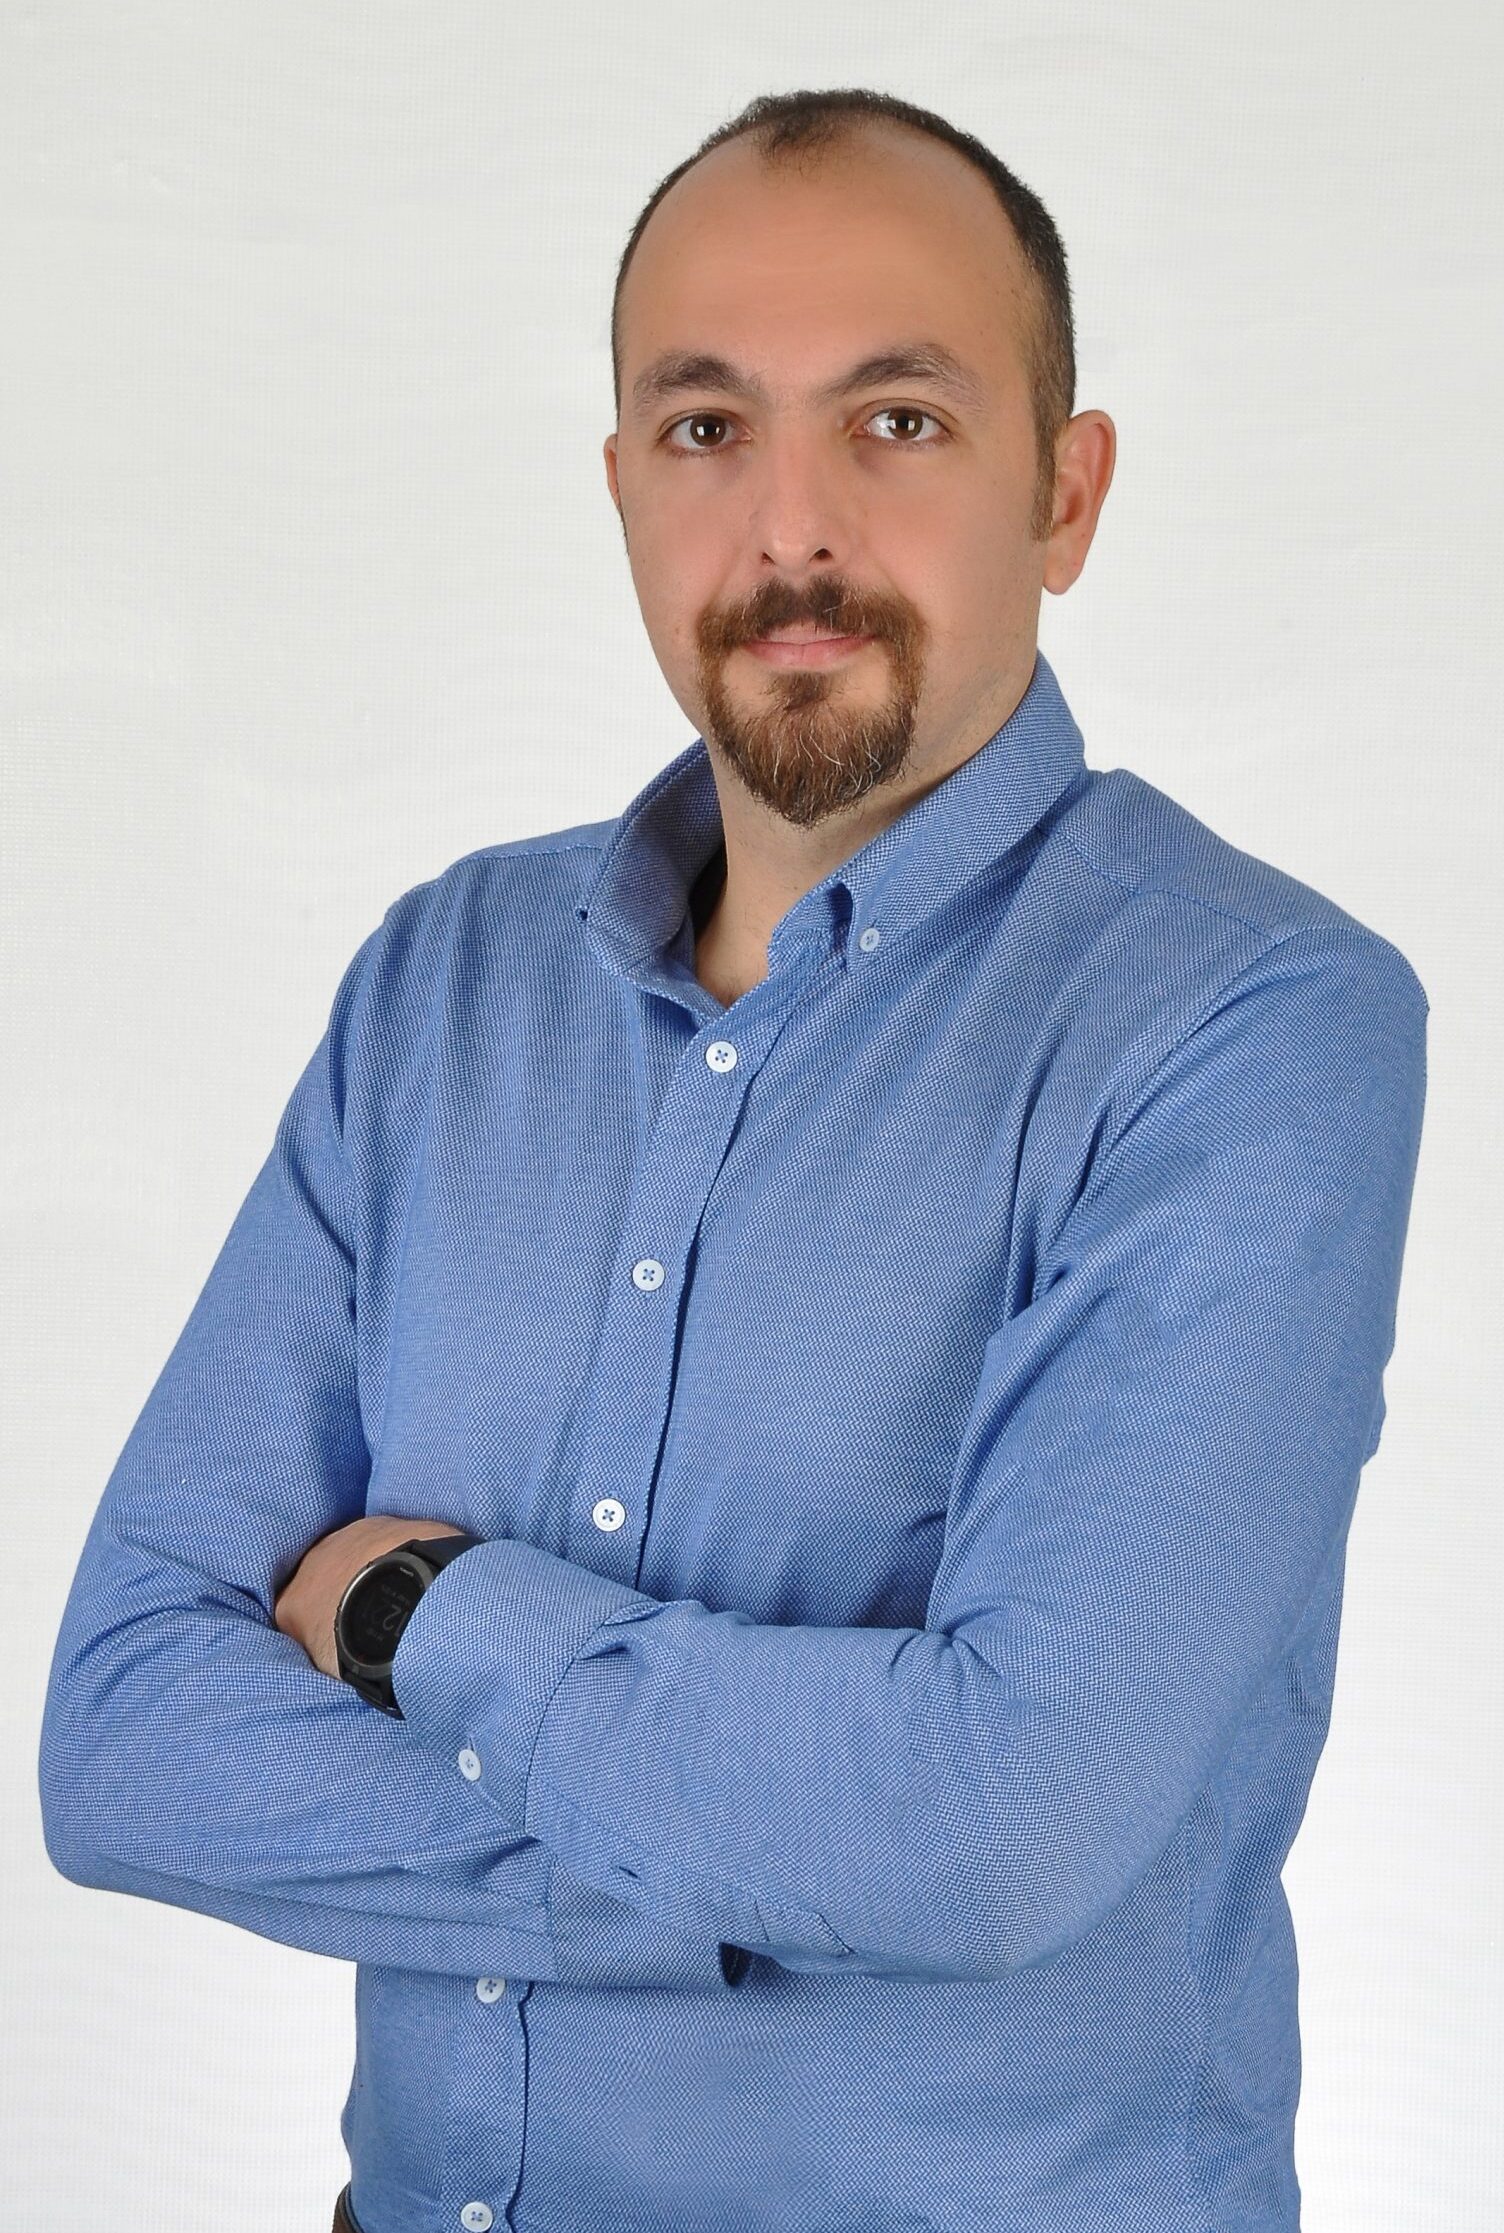 Murat Saglam VP Product